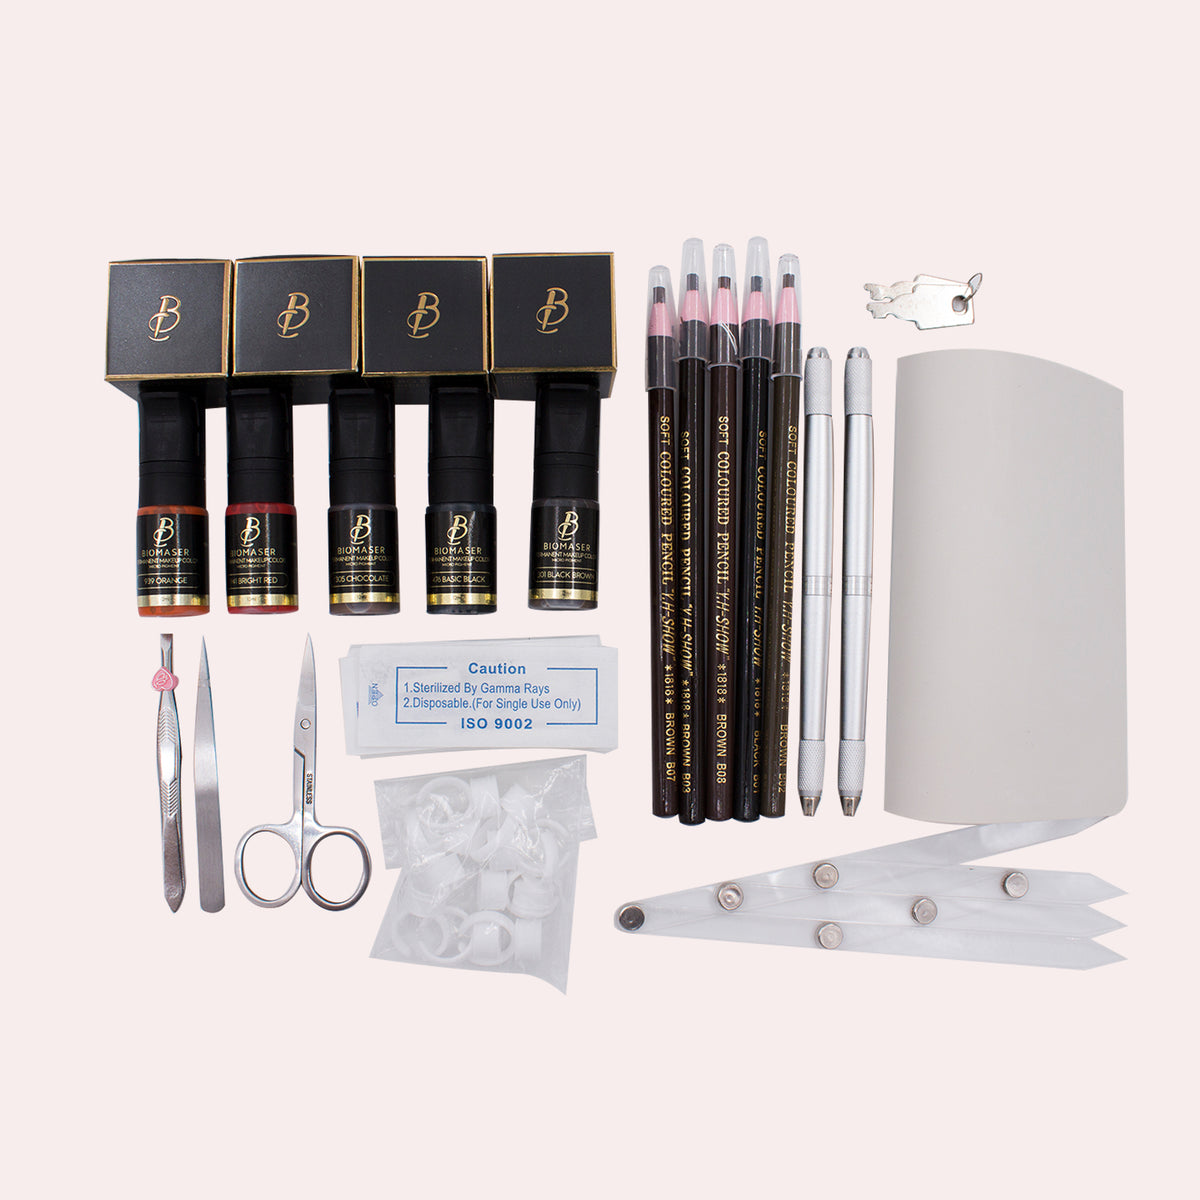 Biomaser Microblading permanent makeup kit with 5 semi cream pigment and 4 cream microblading pigment